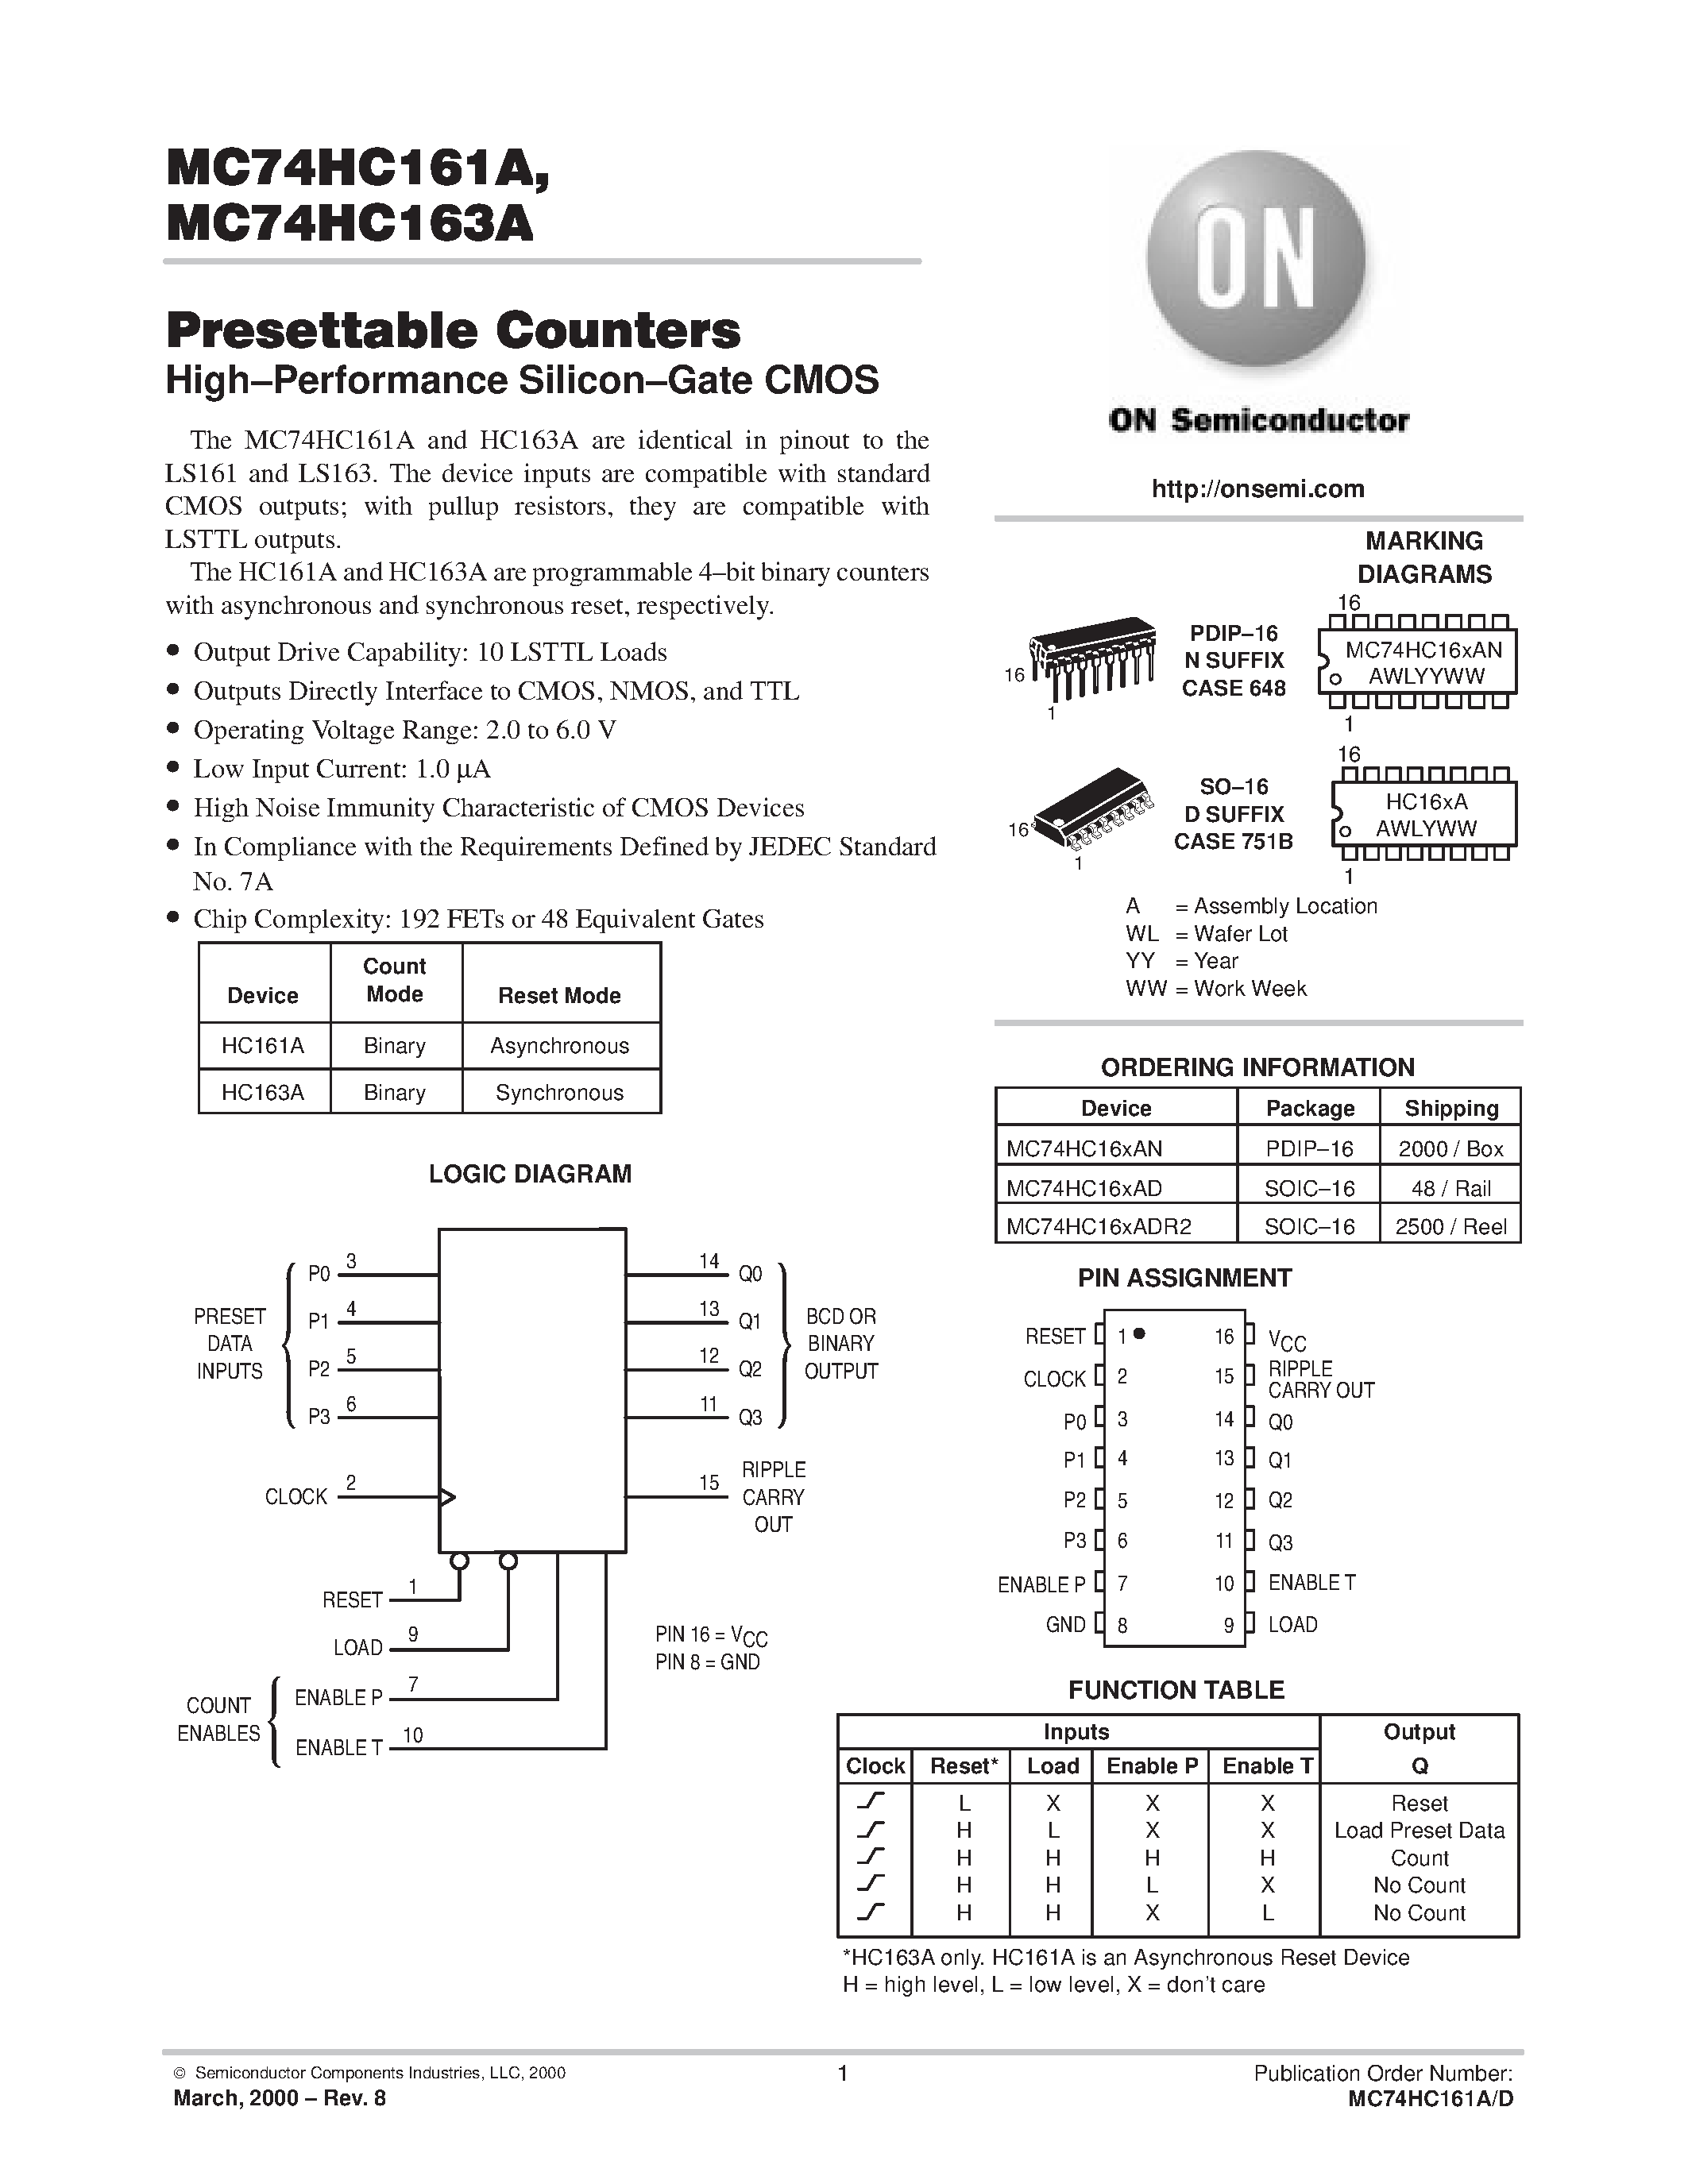 Datasheet MC74HC161A - (MC74HC161A / MC74HC163A) Presettable Counters page 1